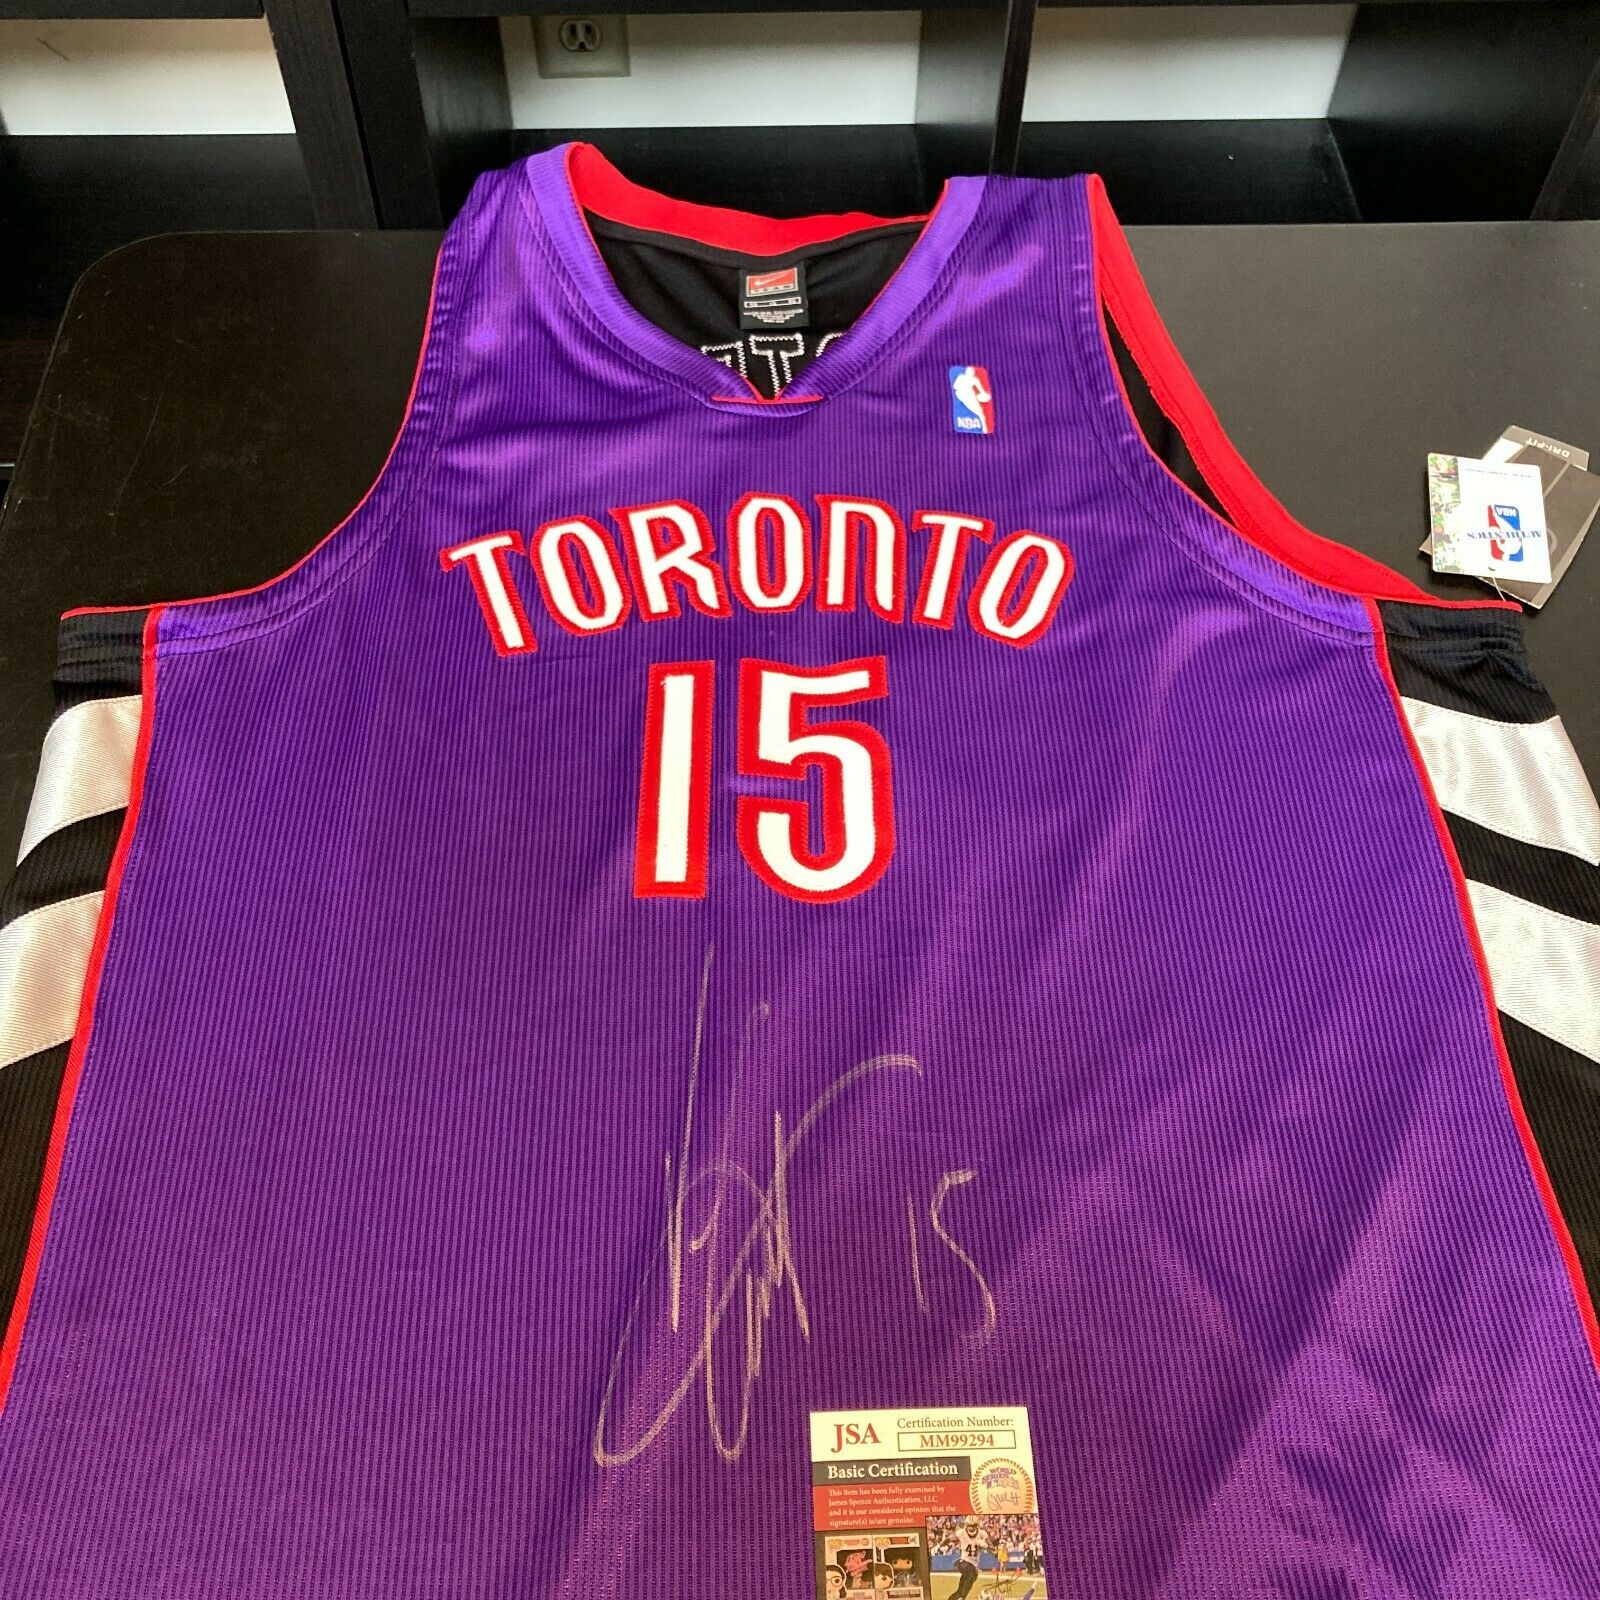 2000-2001 Vince Carter Toronto Raptors game used jersey